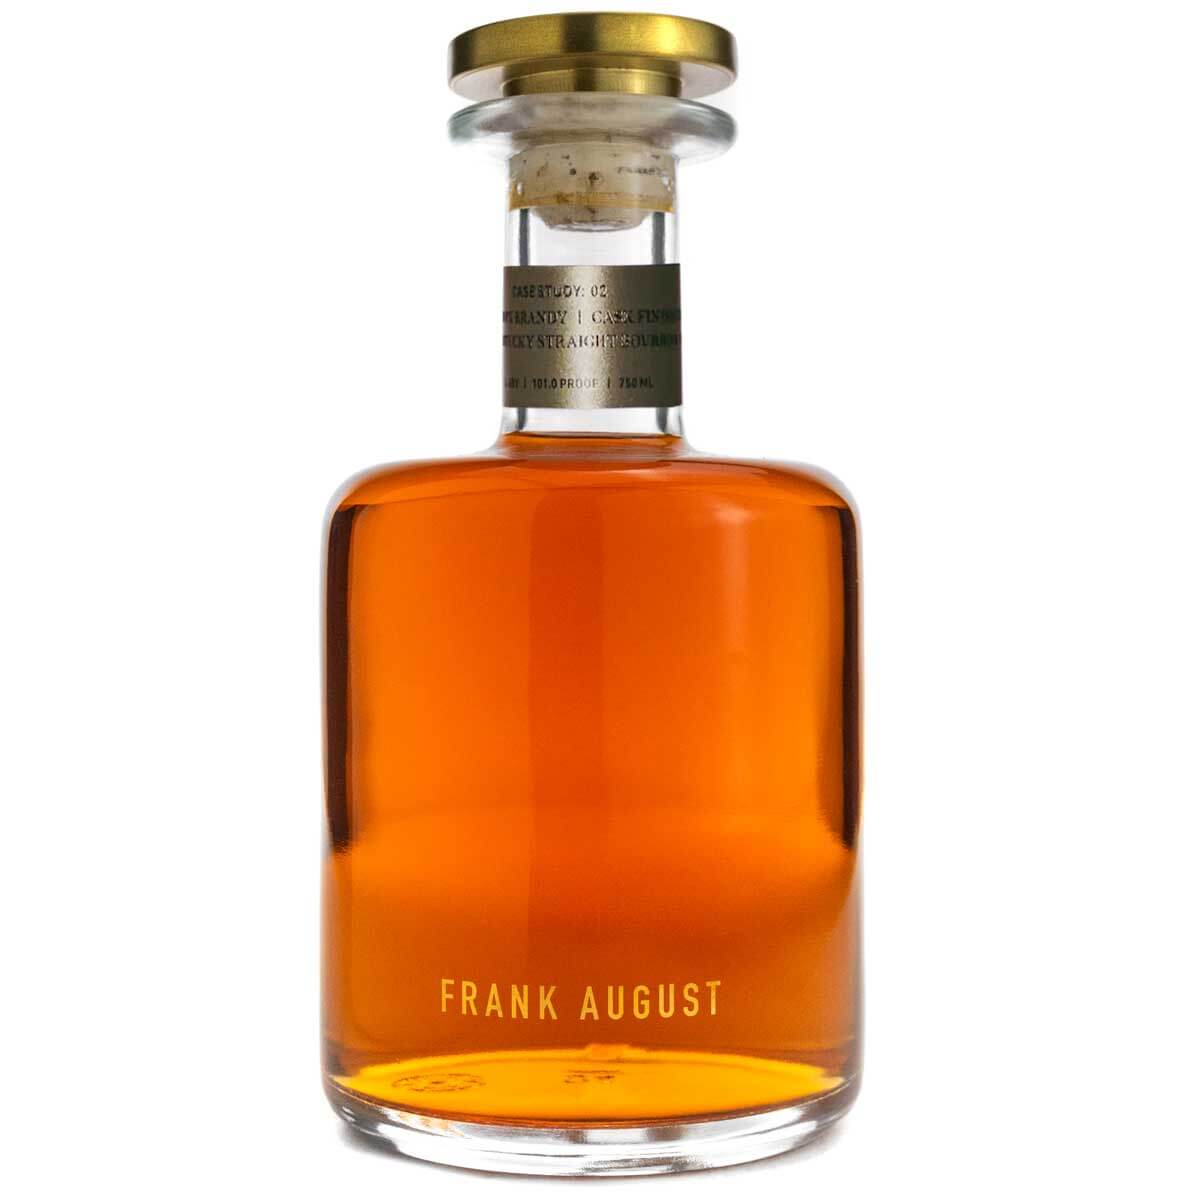 Frank August Case Study bottle